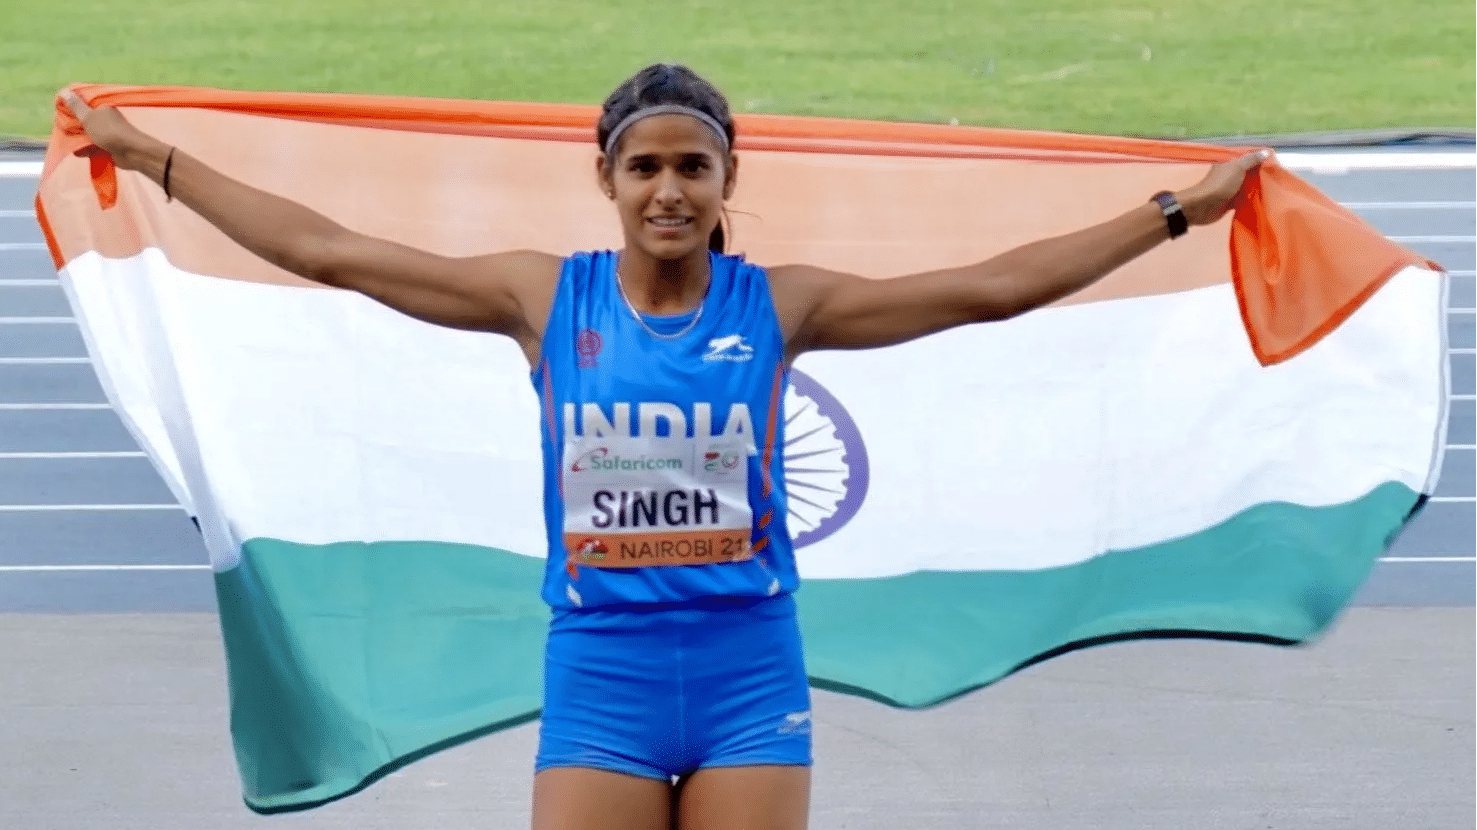 Shaili Singh, the next big star in Indian athletics